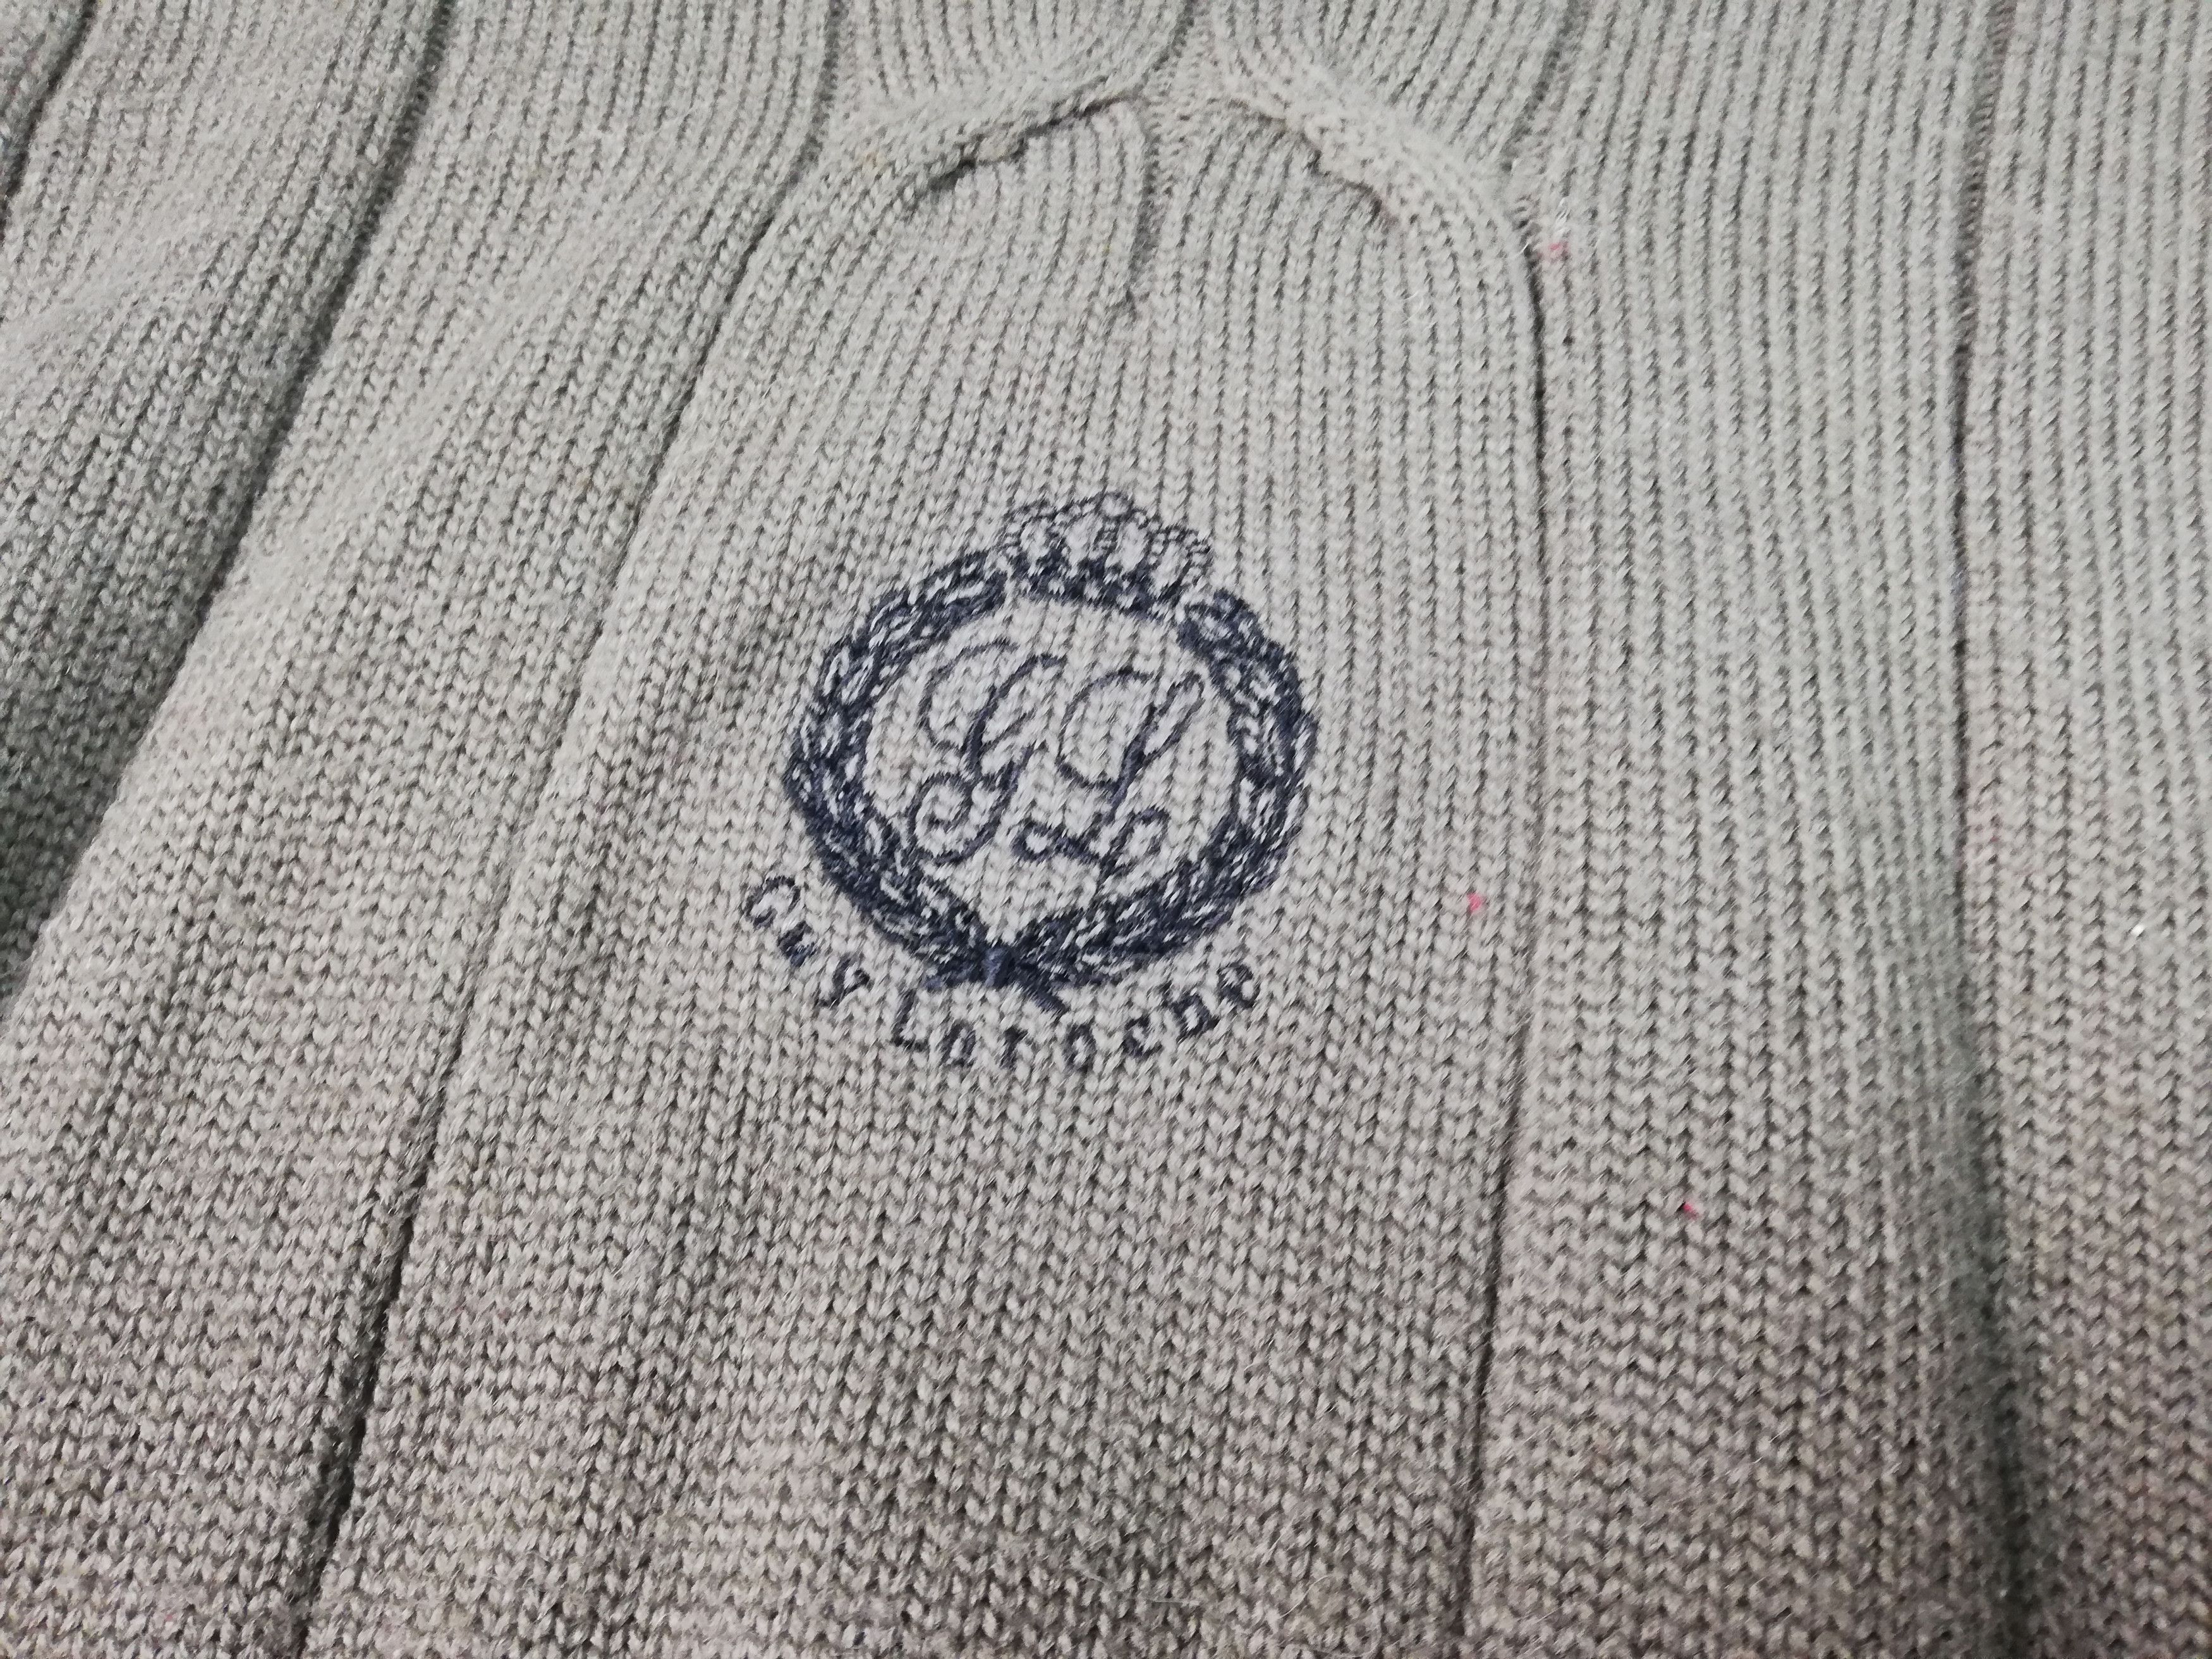 Vintage Vintage Guy Laroche Embroidered Logo Knitwear Sweater Size US M / EU 48-50 / 2 - 3 Thumbnail